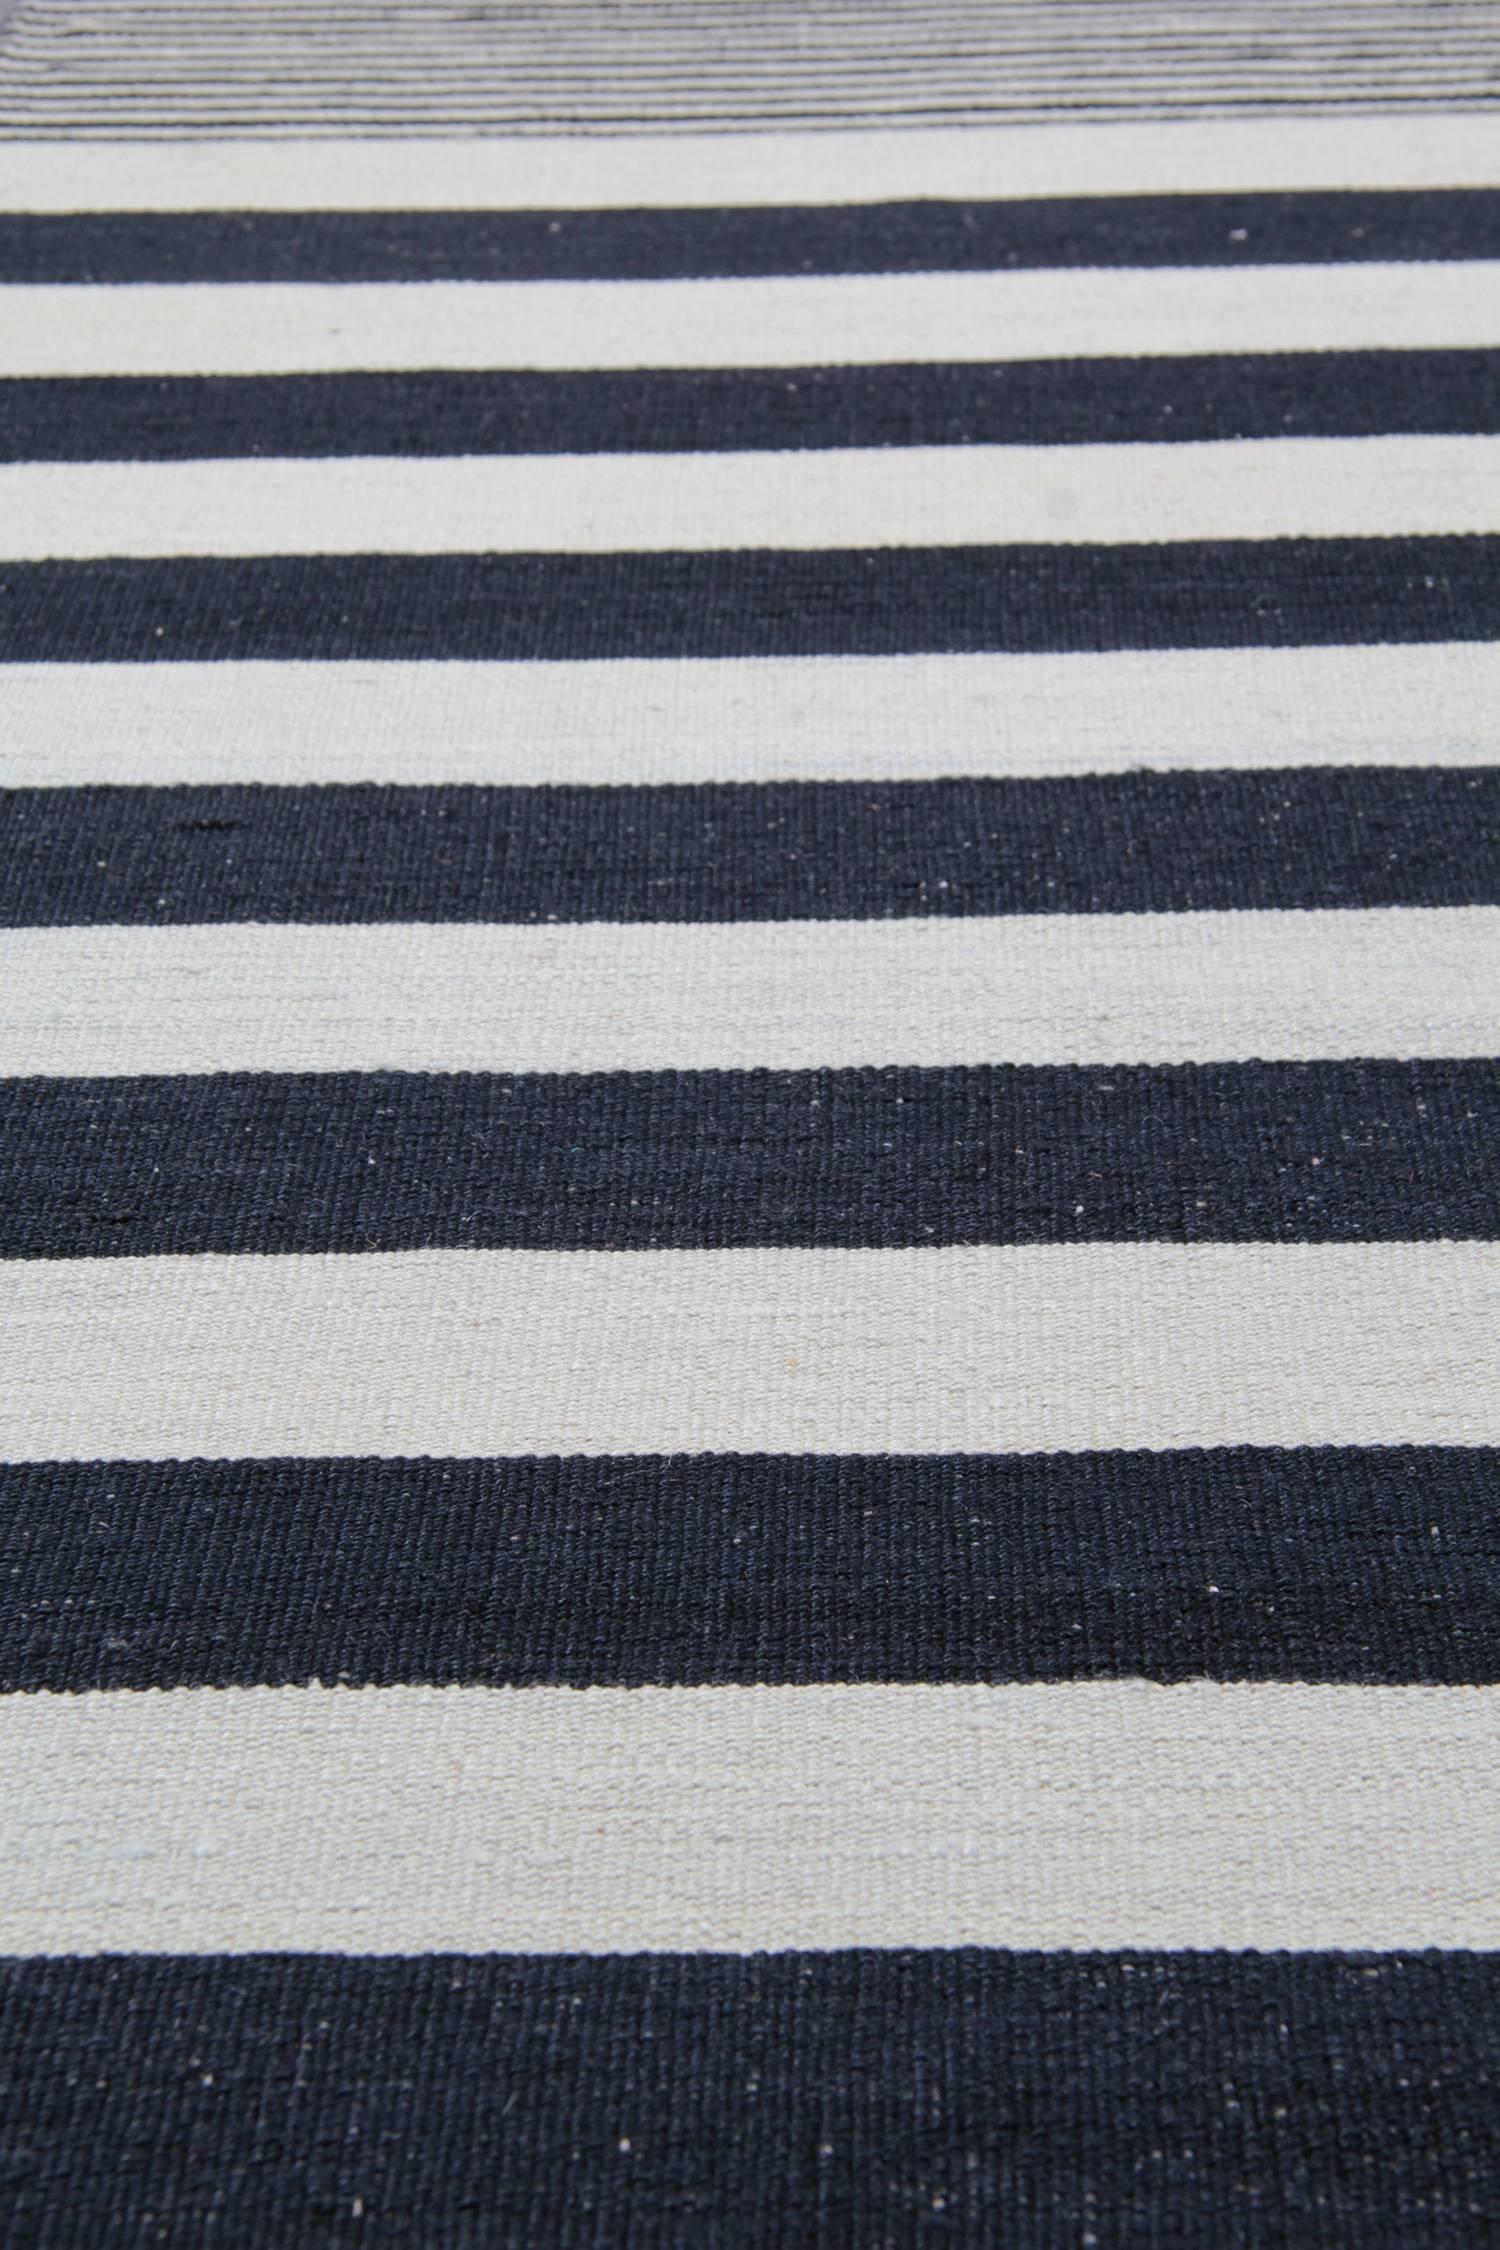 Vegetable Dyed Striped Rug, Kilim Rugs Carpet from Afghanistan, Modern Striped Kilim Rugs,